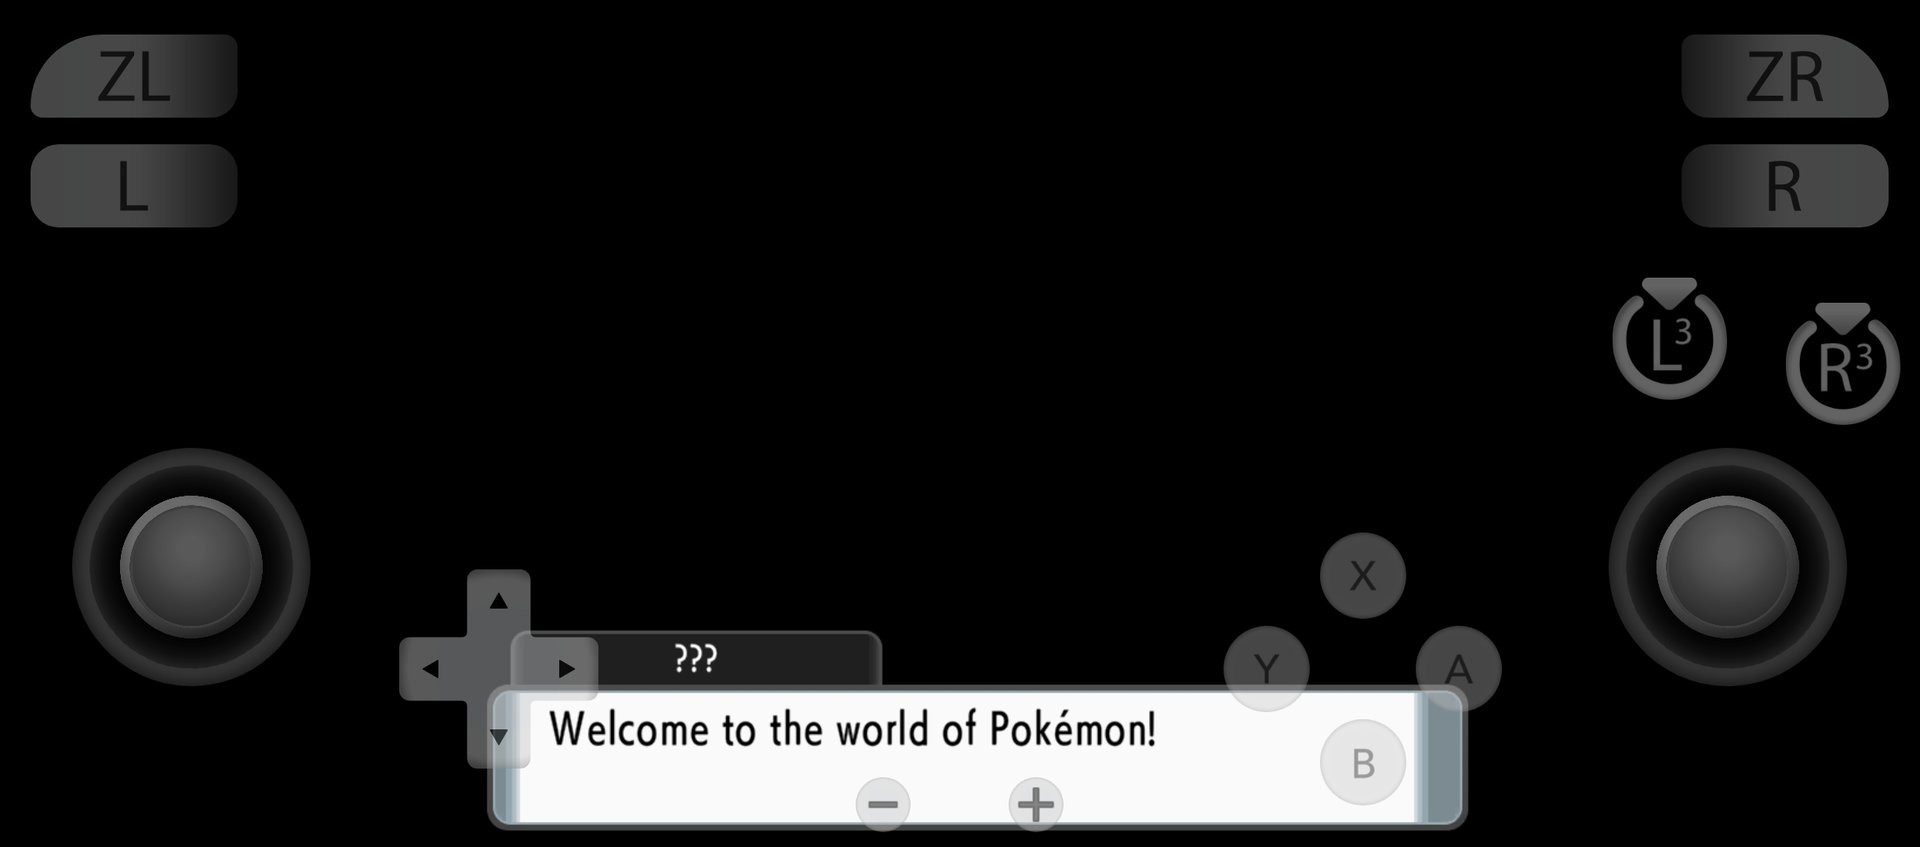 Yuzu emulator on Android Pokemon Brilliant Diamond Screenshot 1 2320